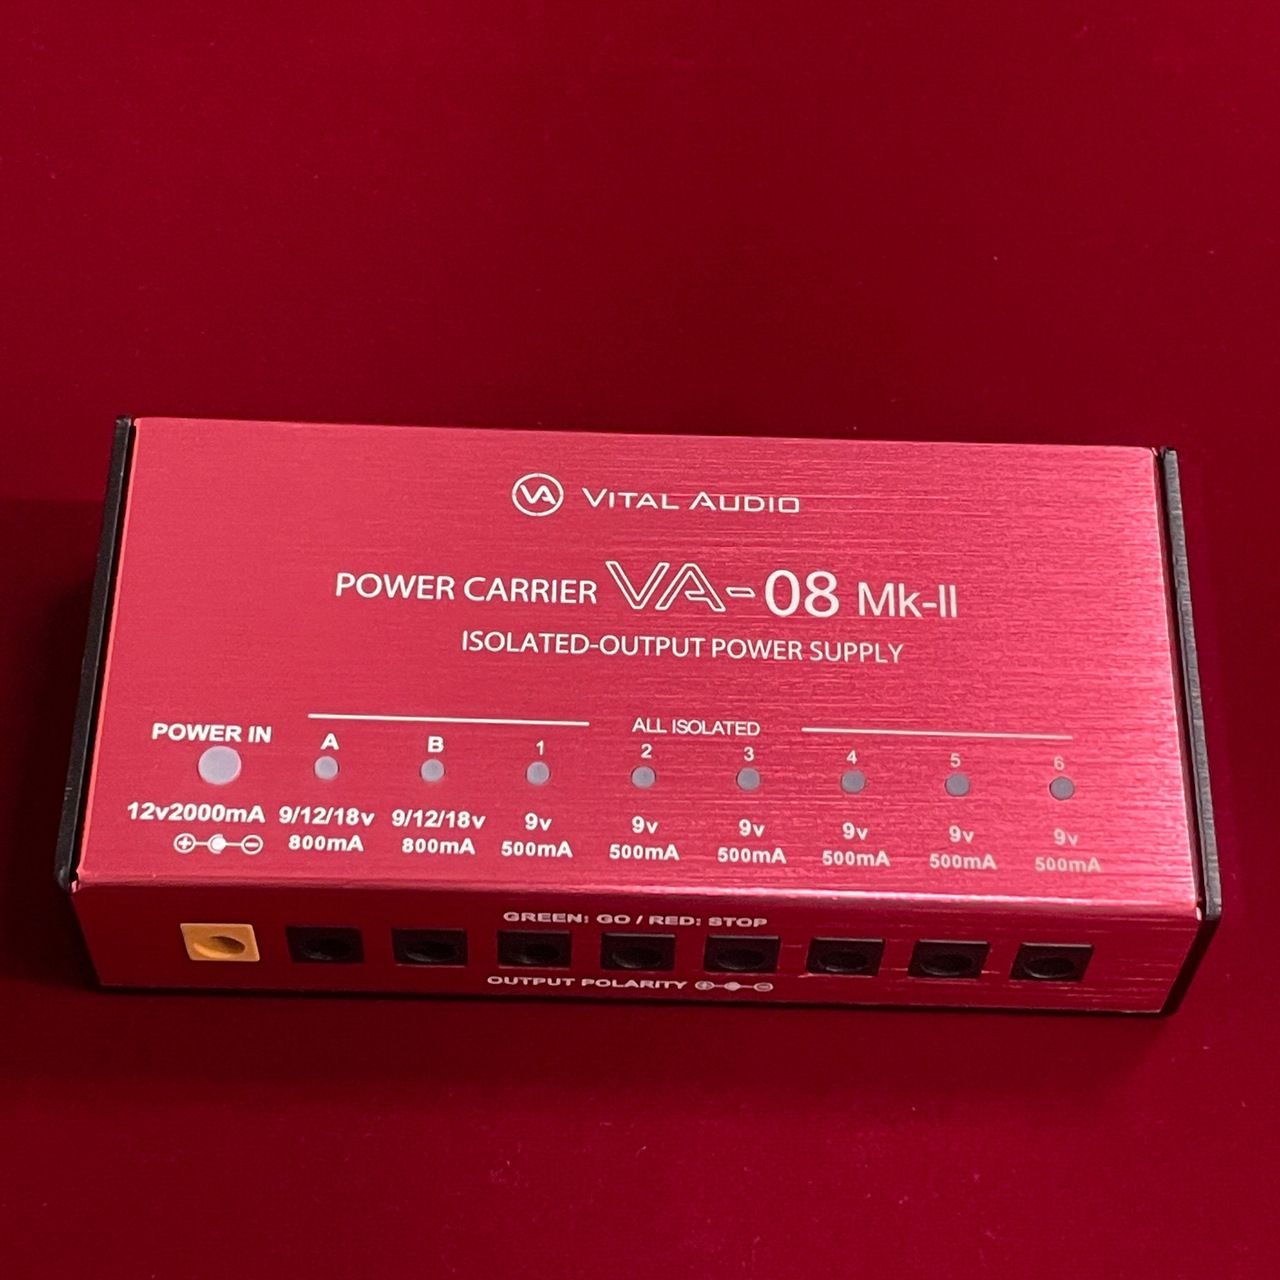 Vital Audio POWER CARRIER VA-08 MkⅡ 【アイソレート・パワー